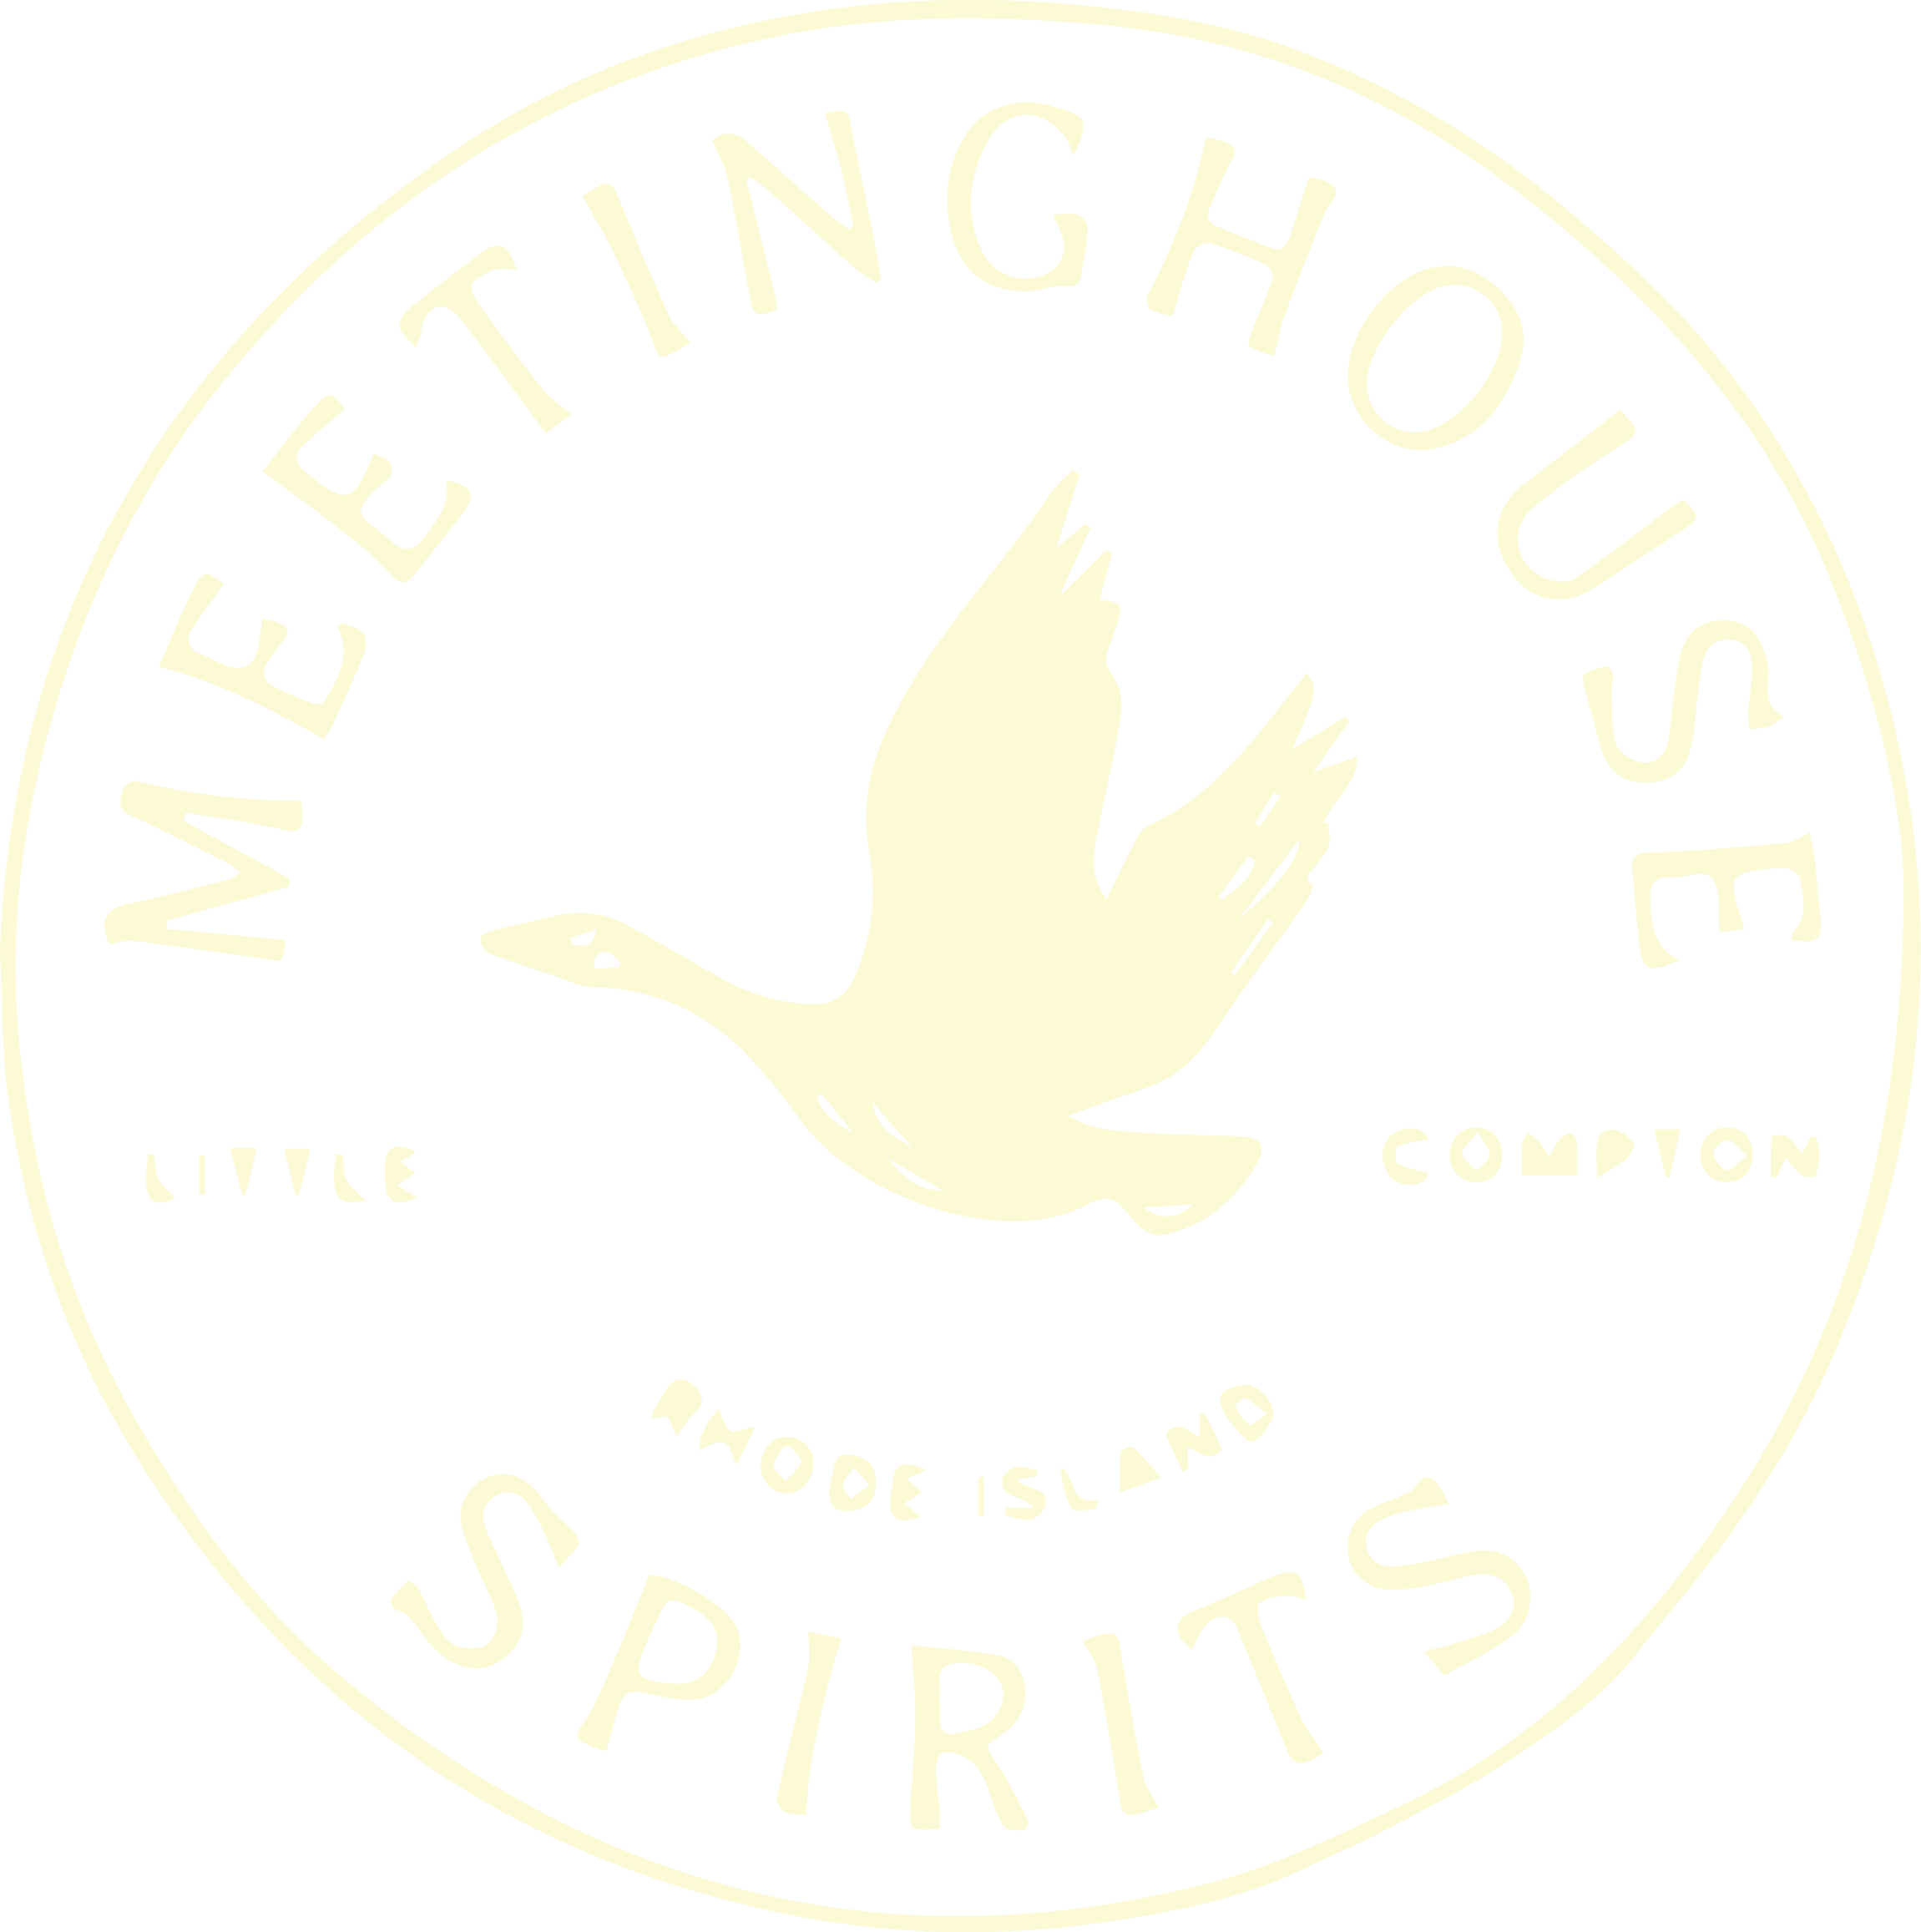 MeetingHouse Spirits